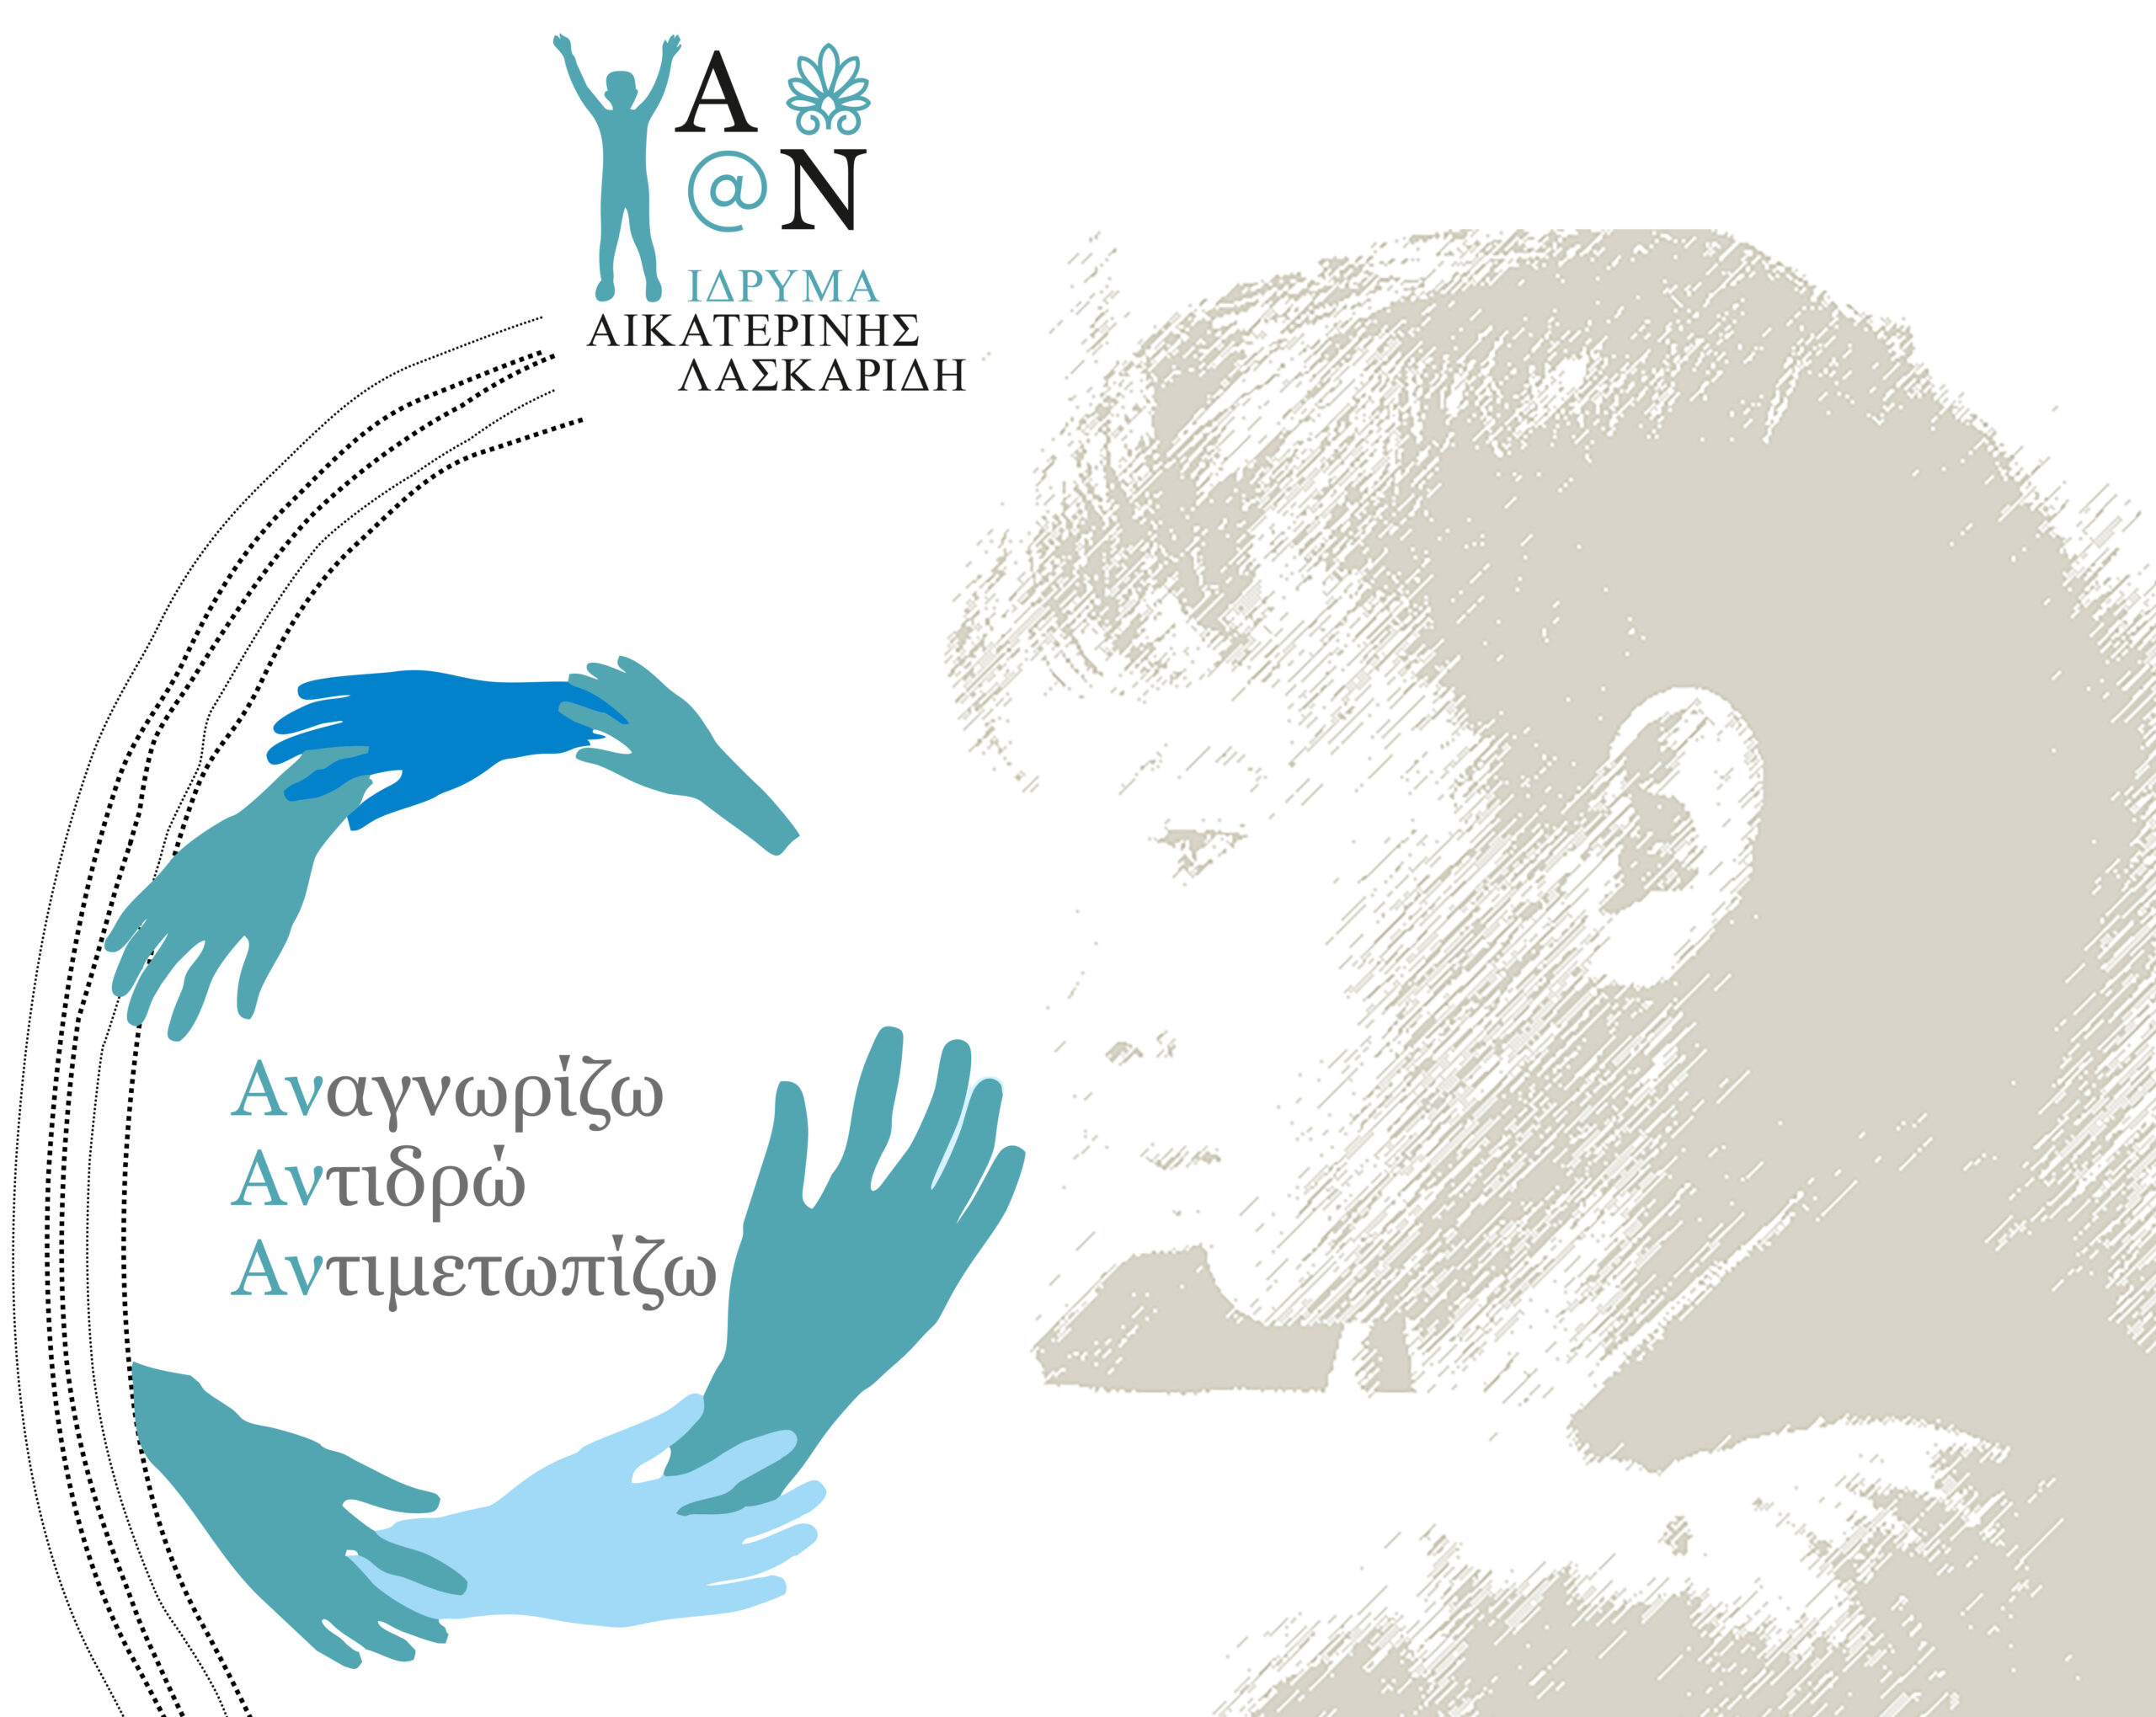 Aikaterini Laskaridis Foundation-Grooming: Το φαινόμενο της αποπλάνησης ανηλίκων και συμβουλές προς τους γονείς